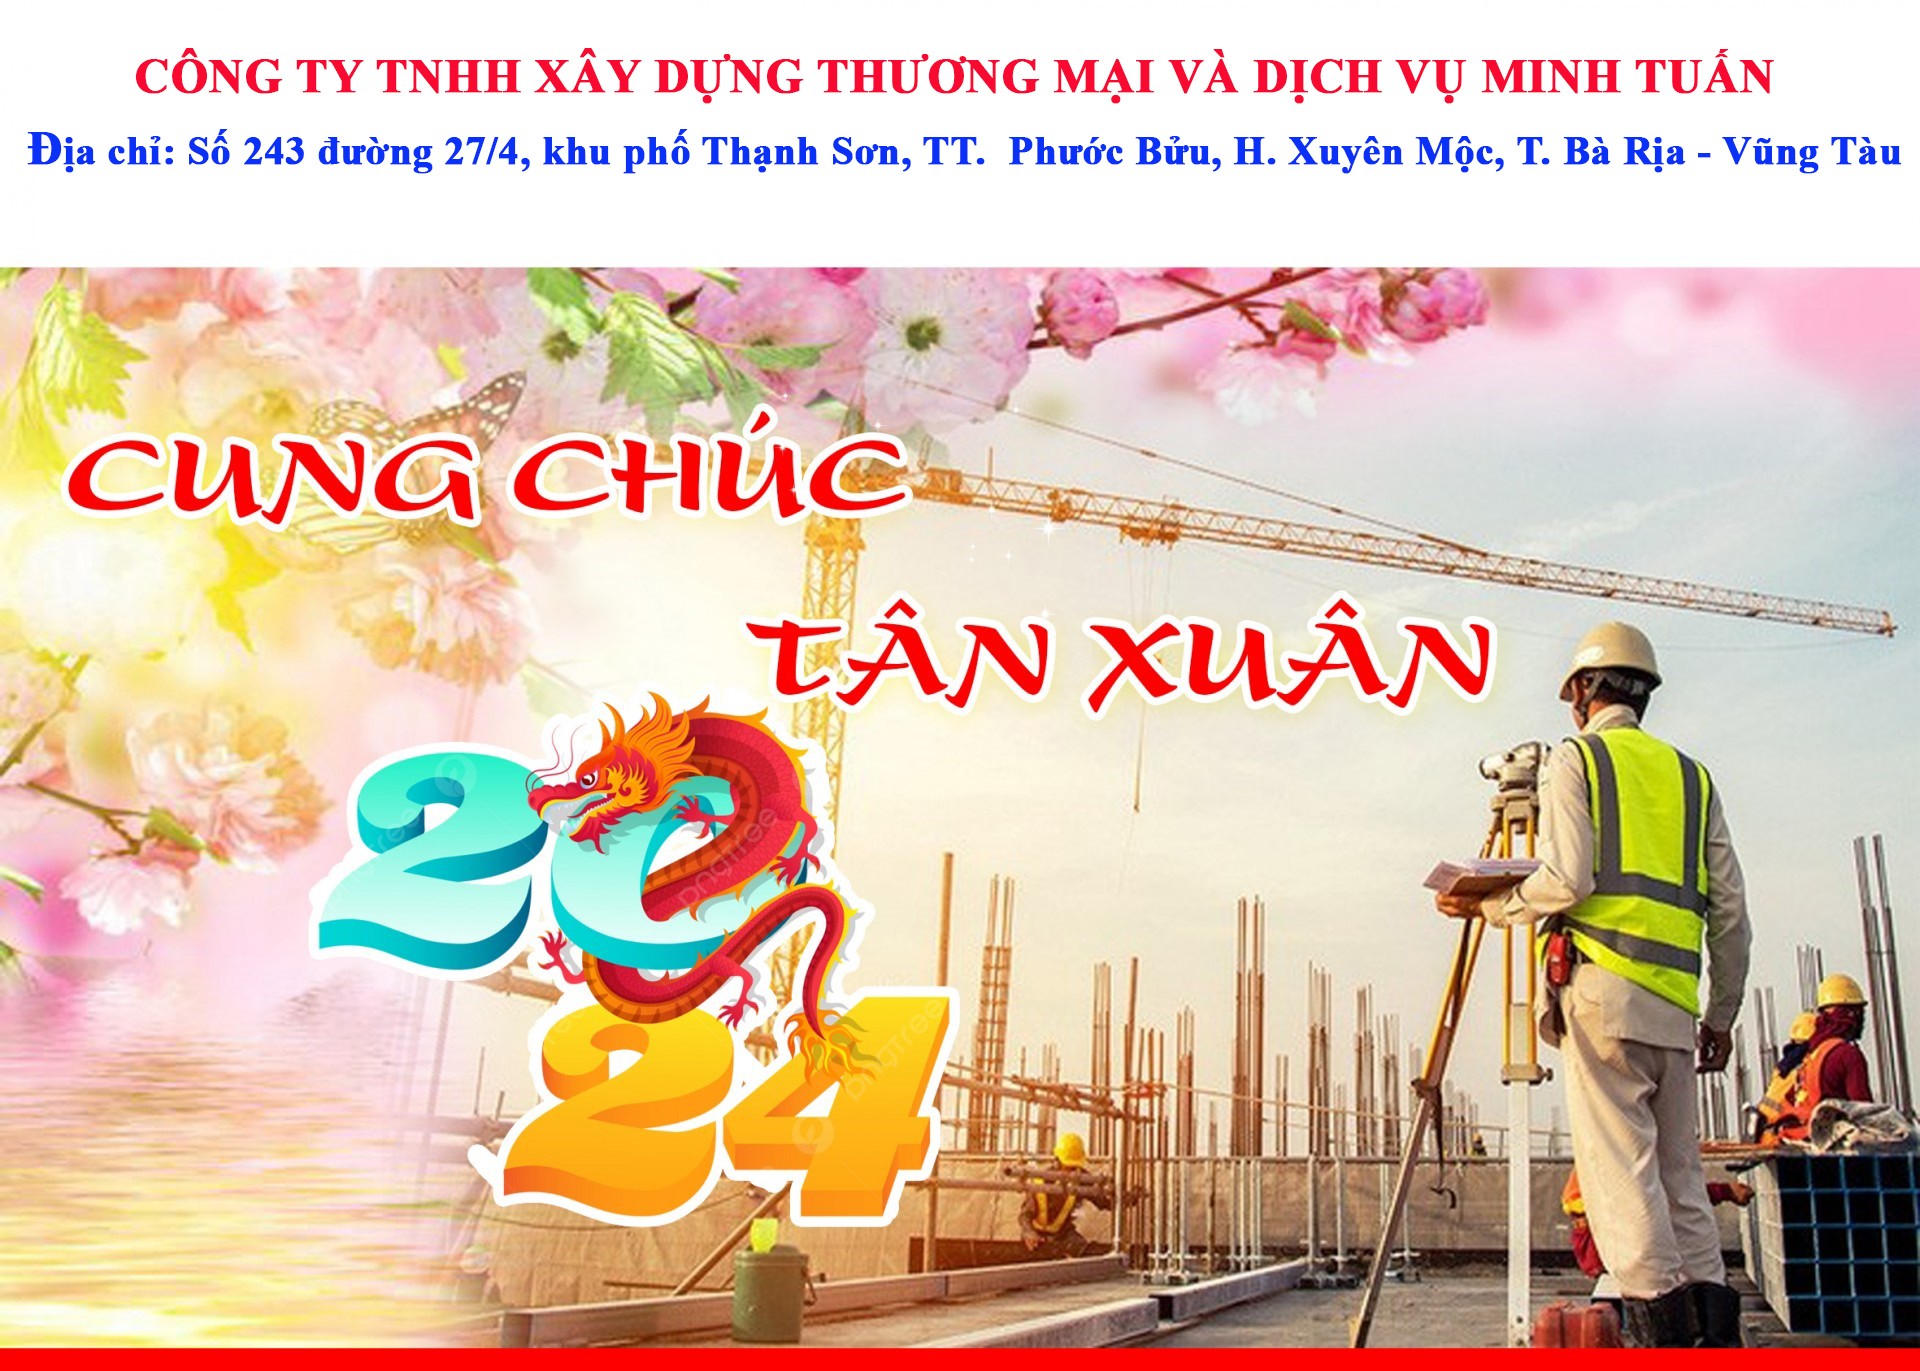 Trần Lân